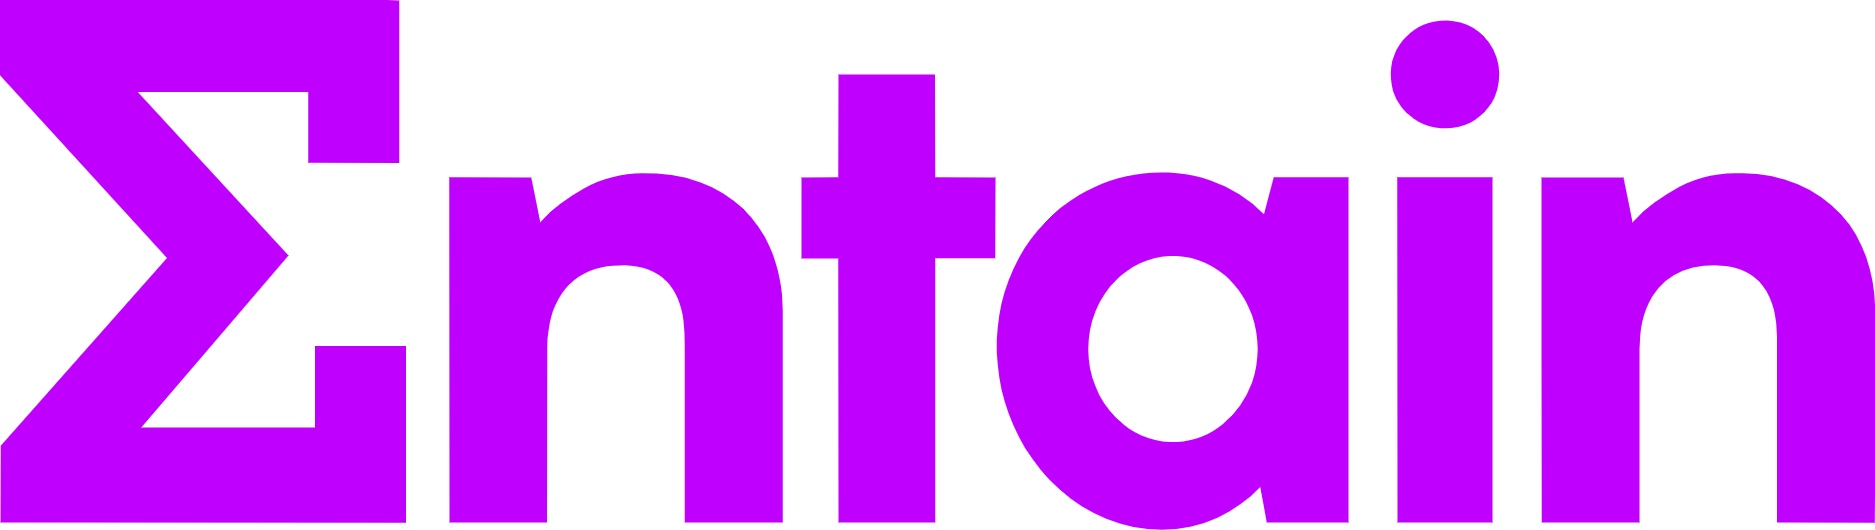 Entain logo large (transparent PNG)